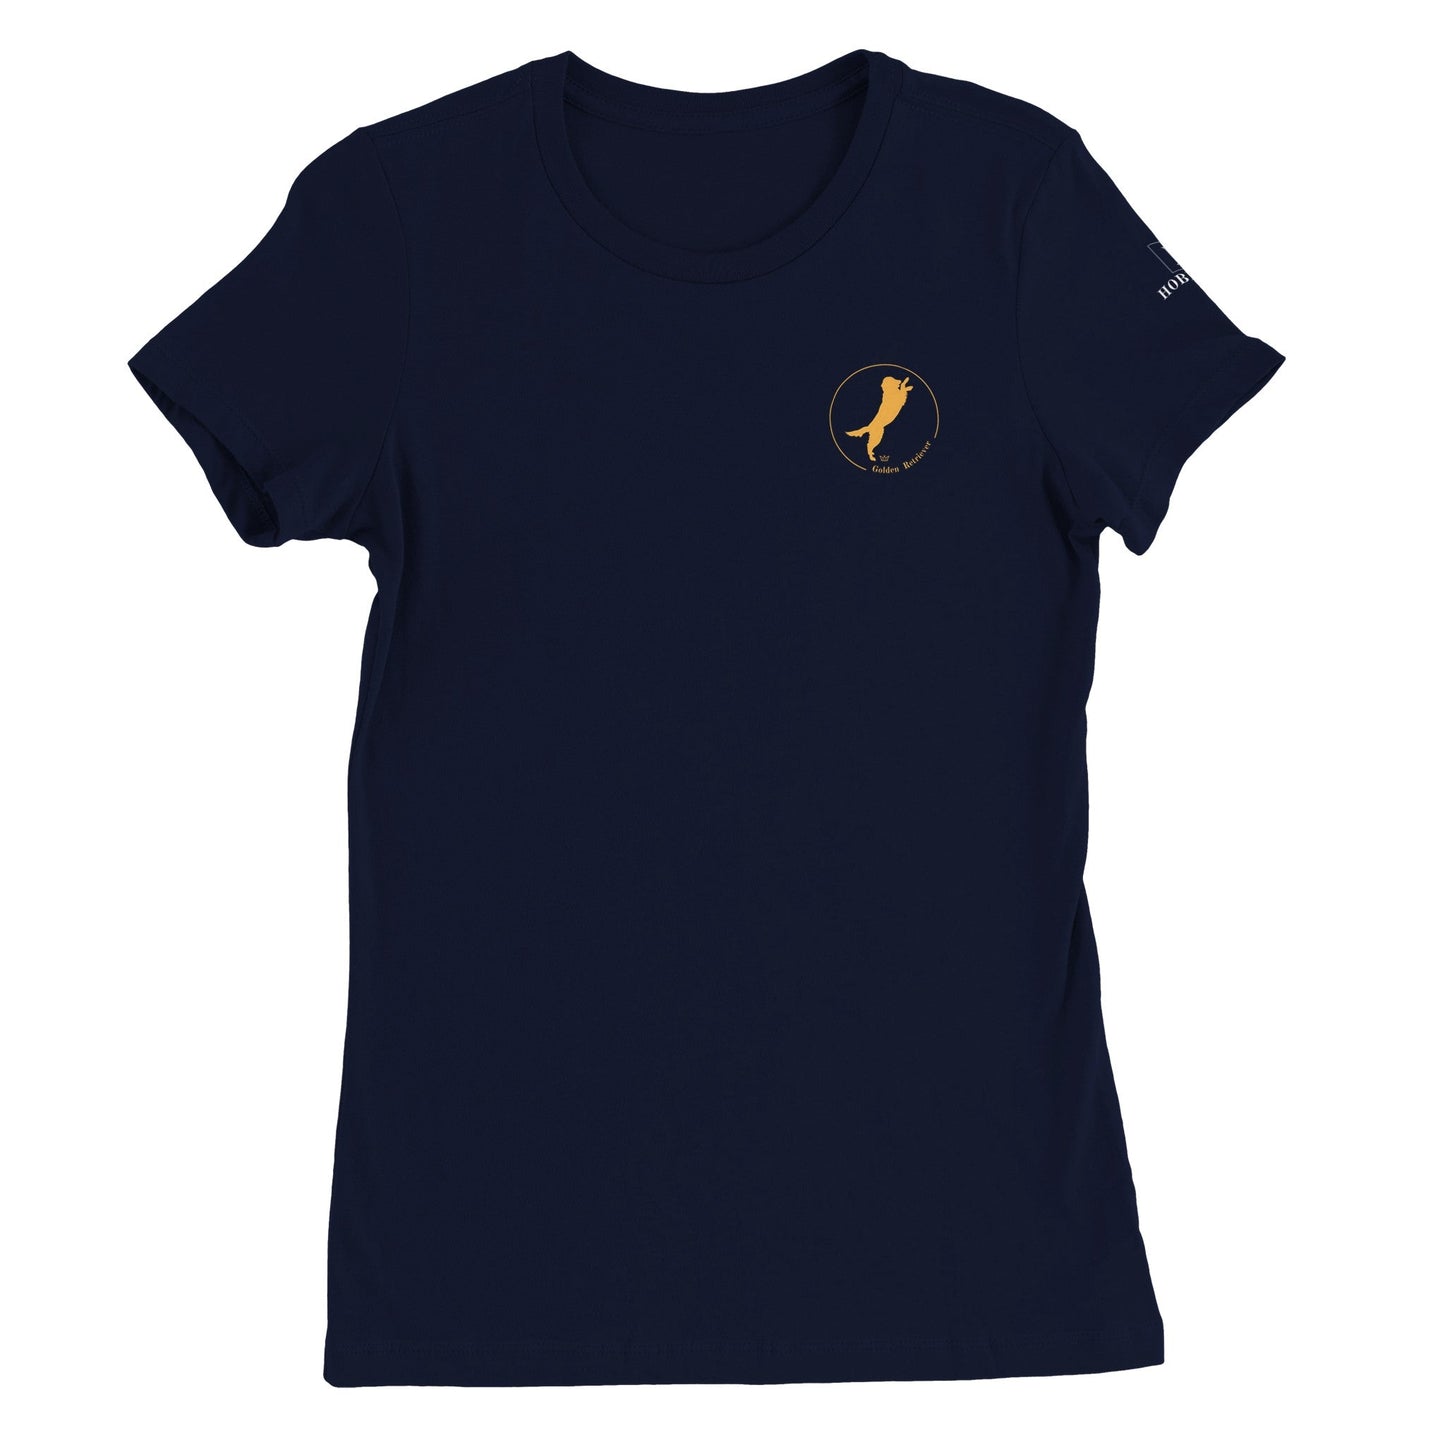 Premium Women's Crewneck T-shirt with Golden Retriever logo - Hobbster